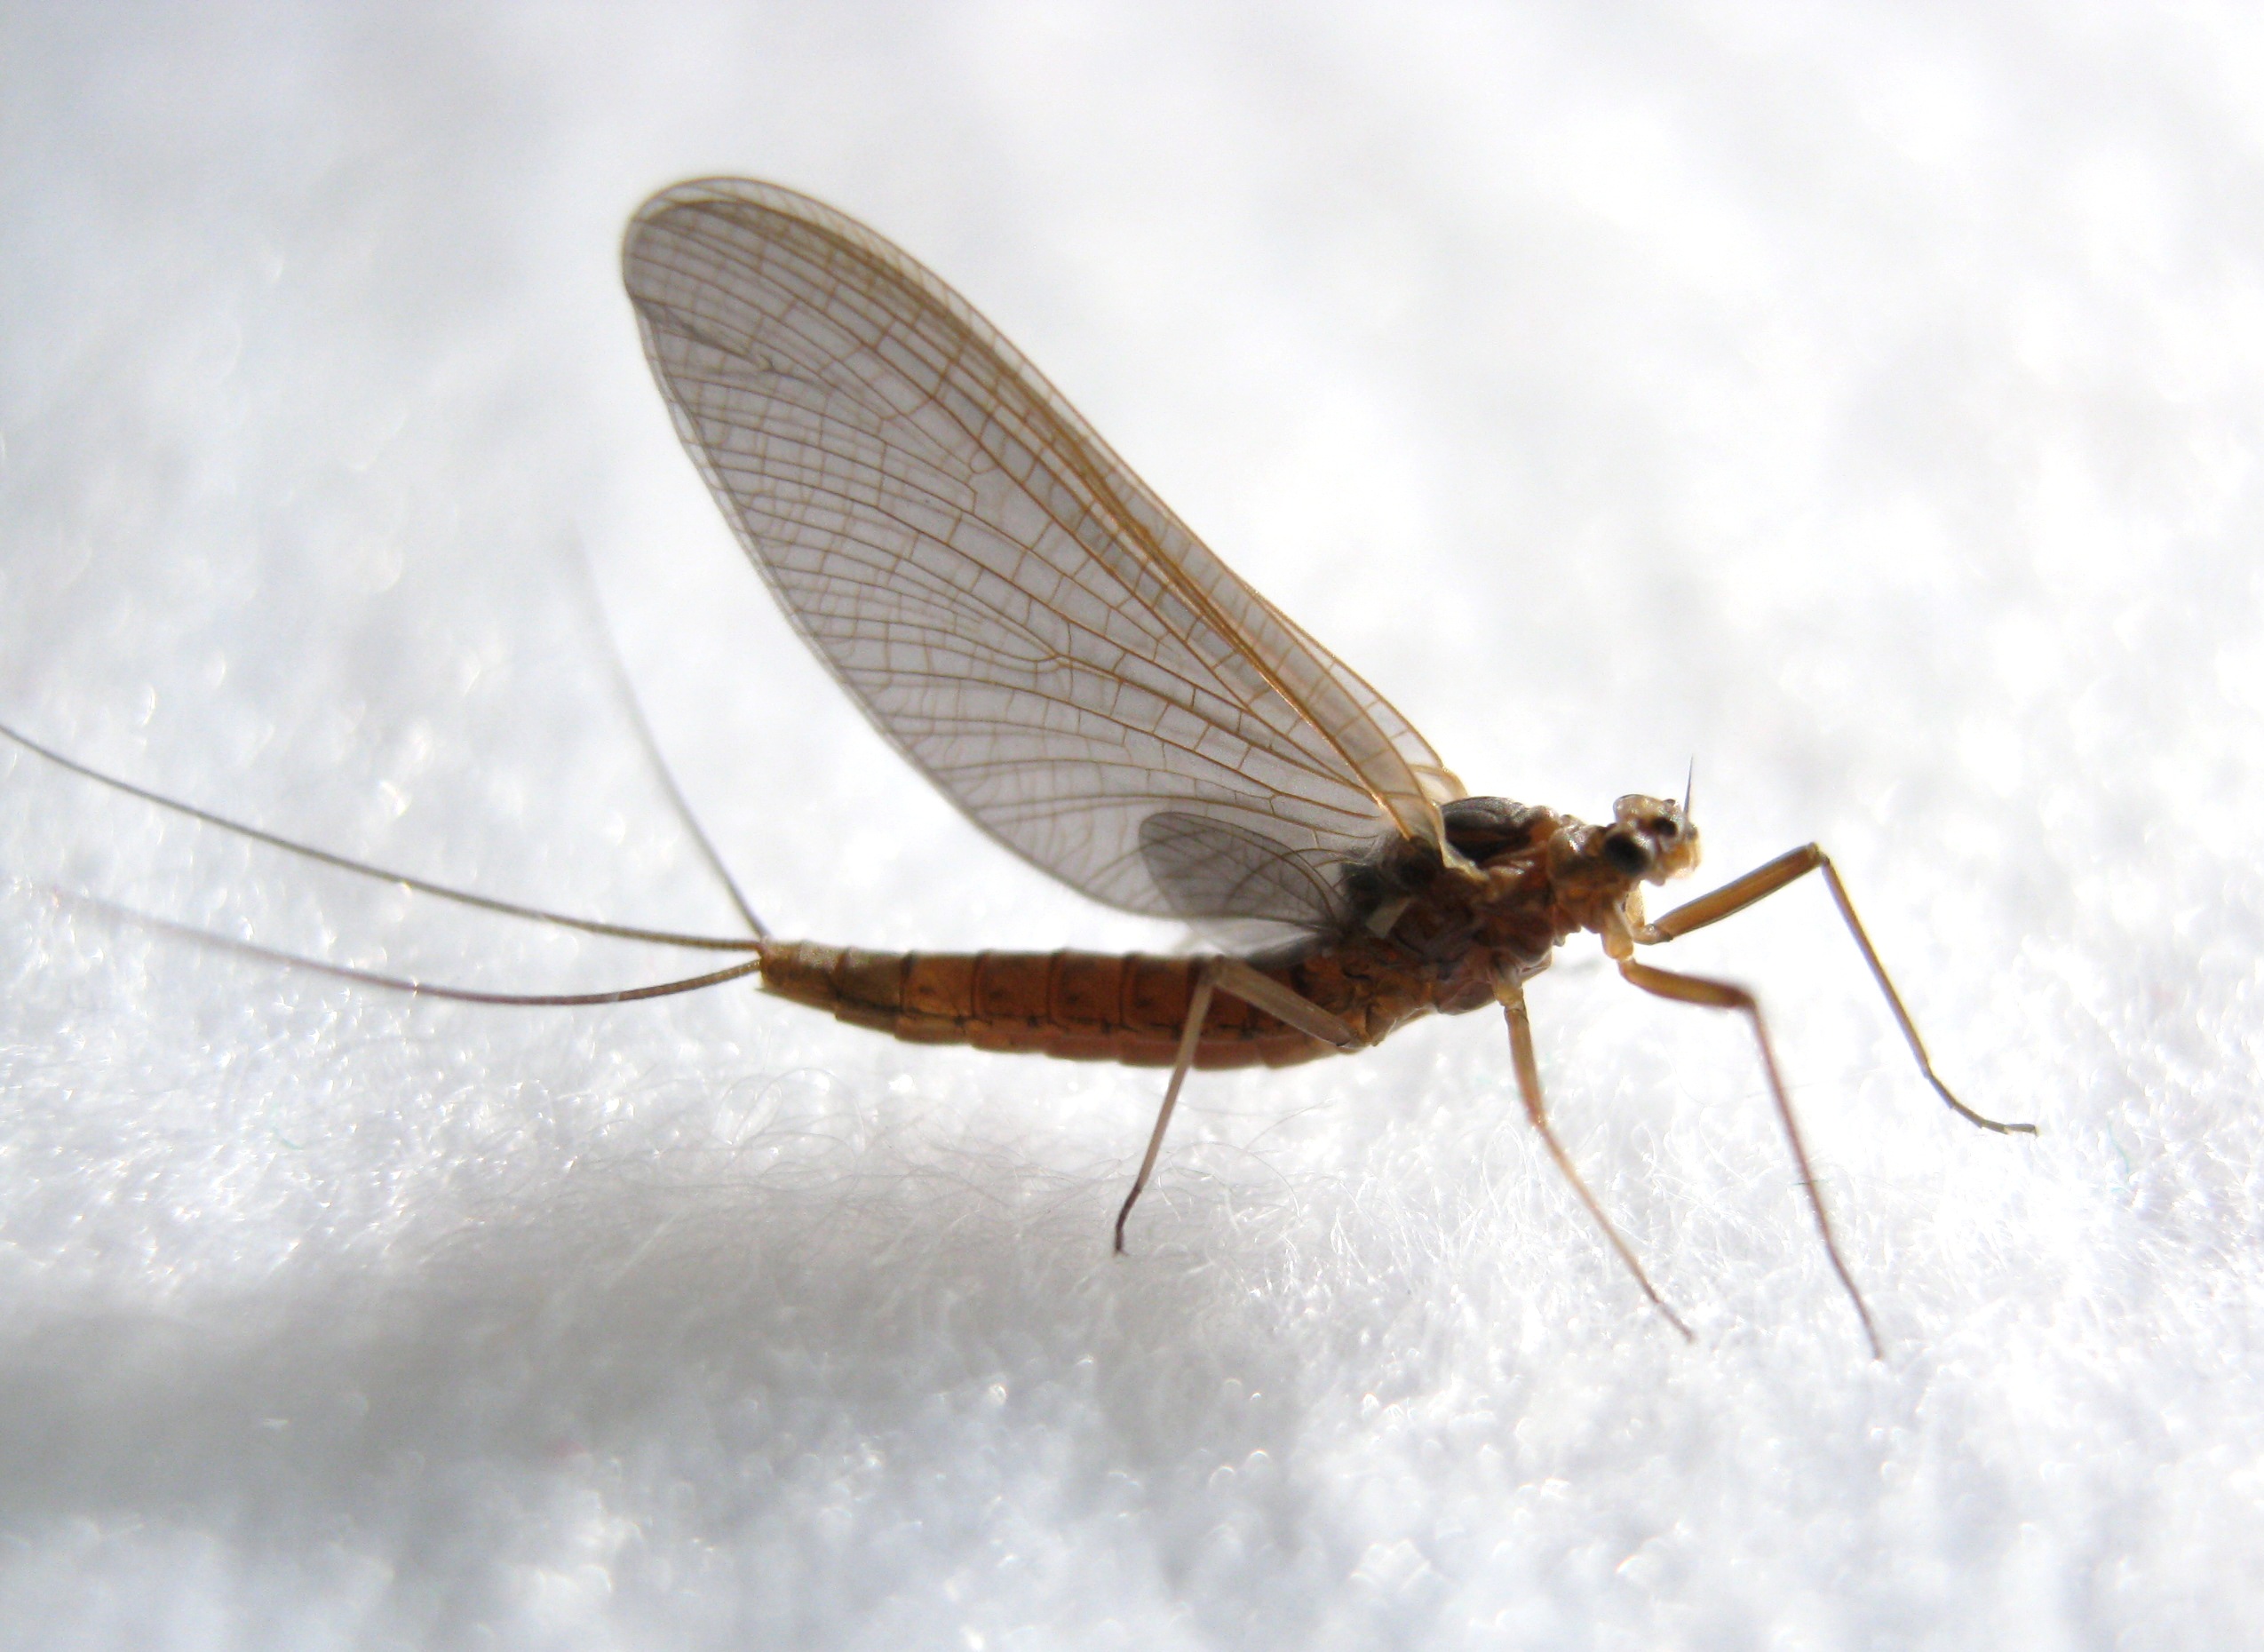 Female Paraleptophlebia debilis (Mahogany Dun) Mayfly Dun from the Fall River in California